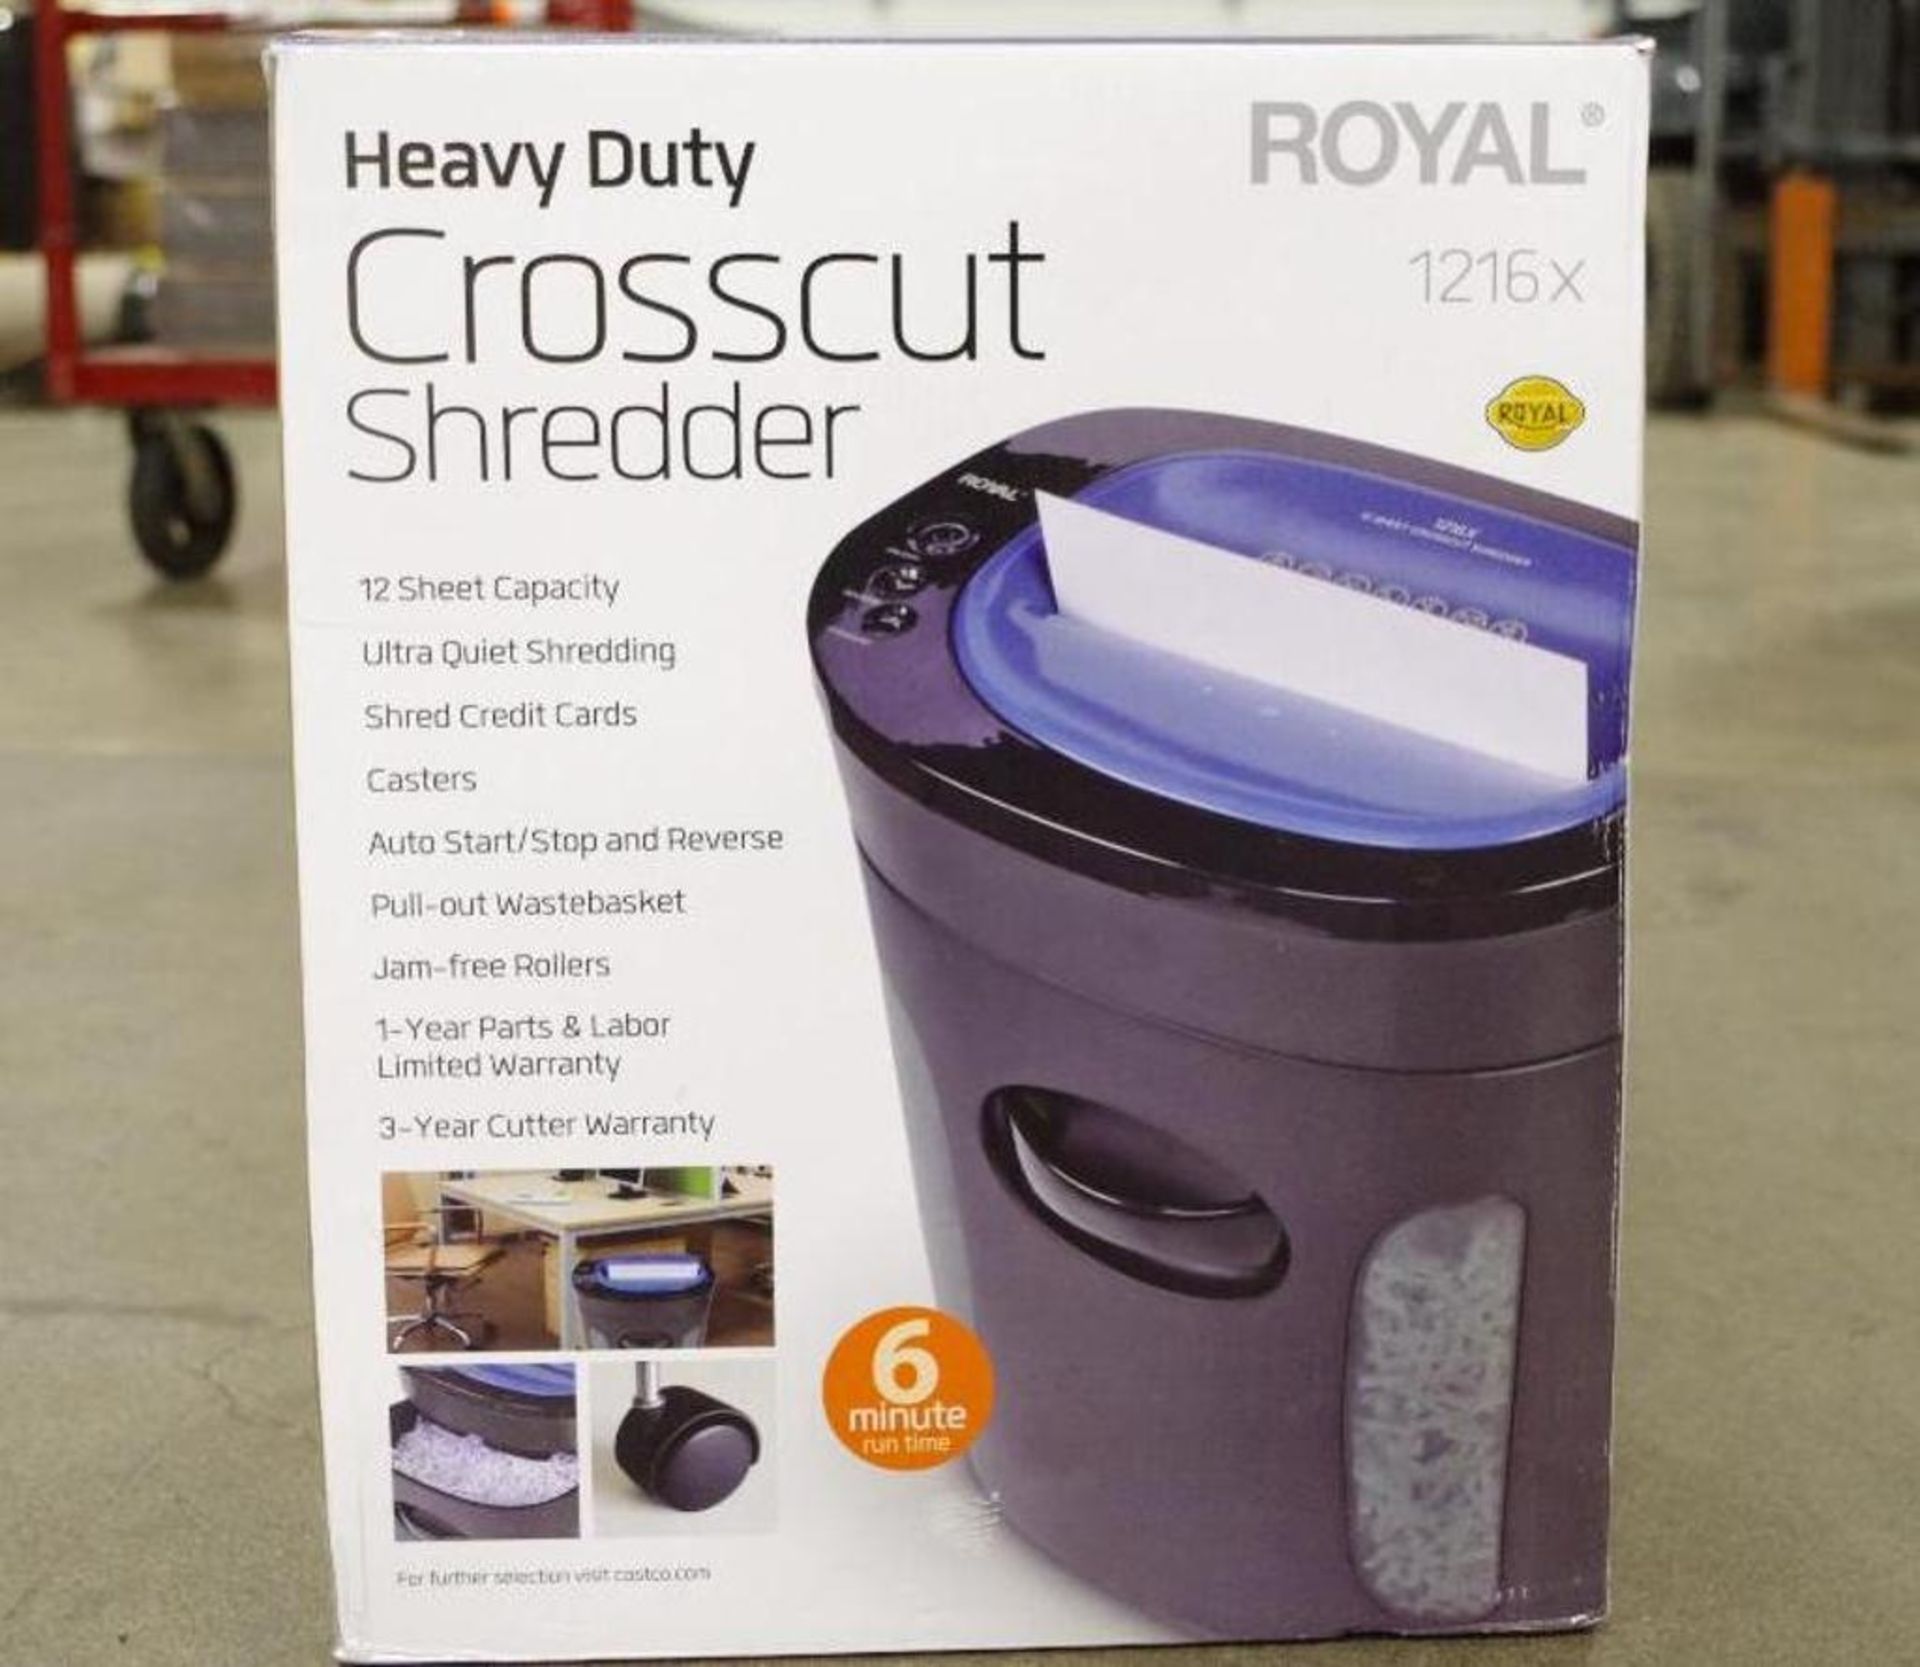 ROYAL Heavy Duty Crosscut Shredder - Image 2 of 3